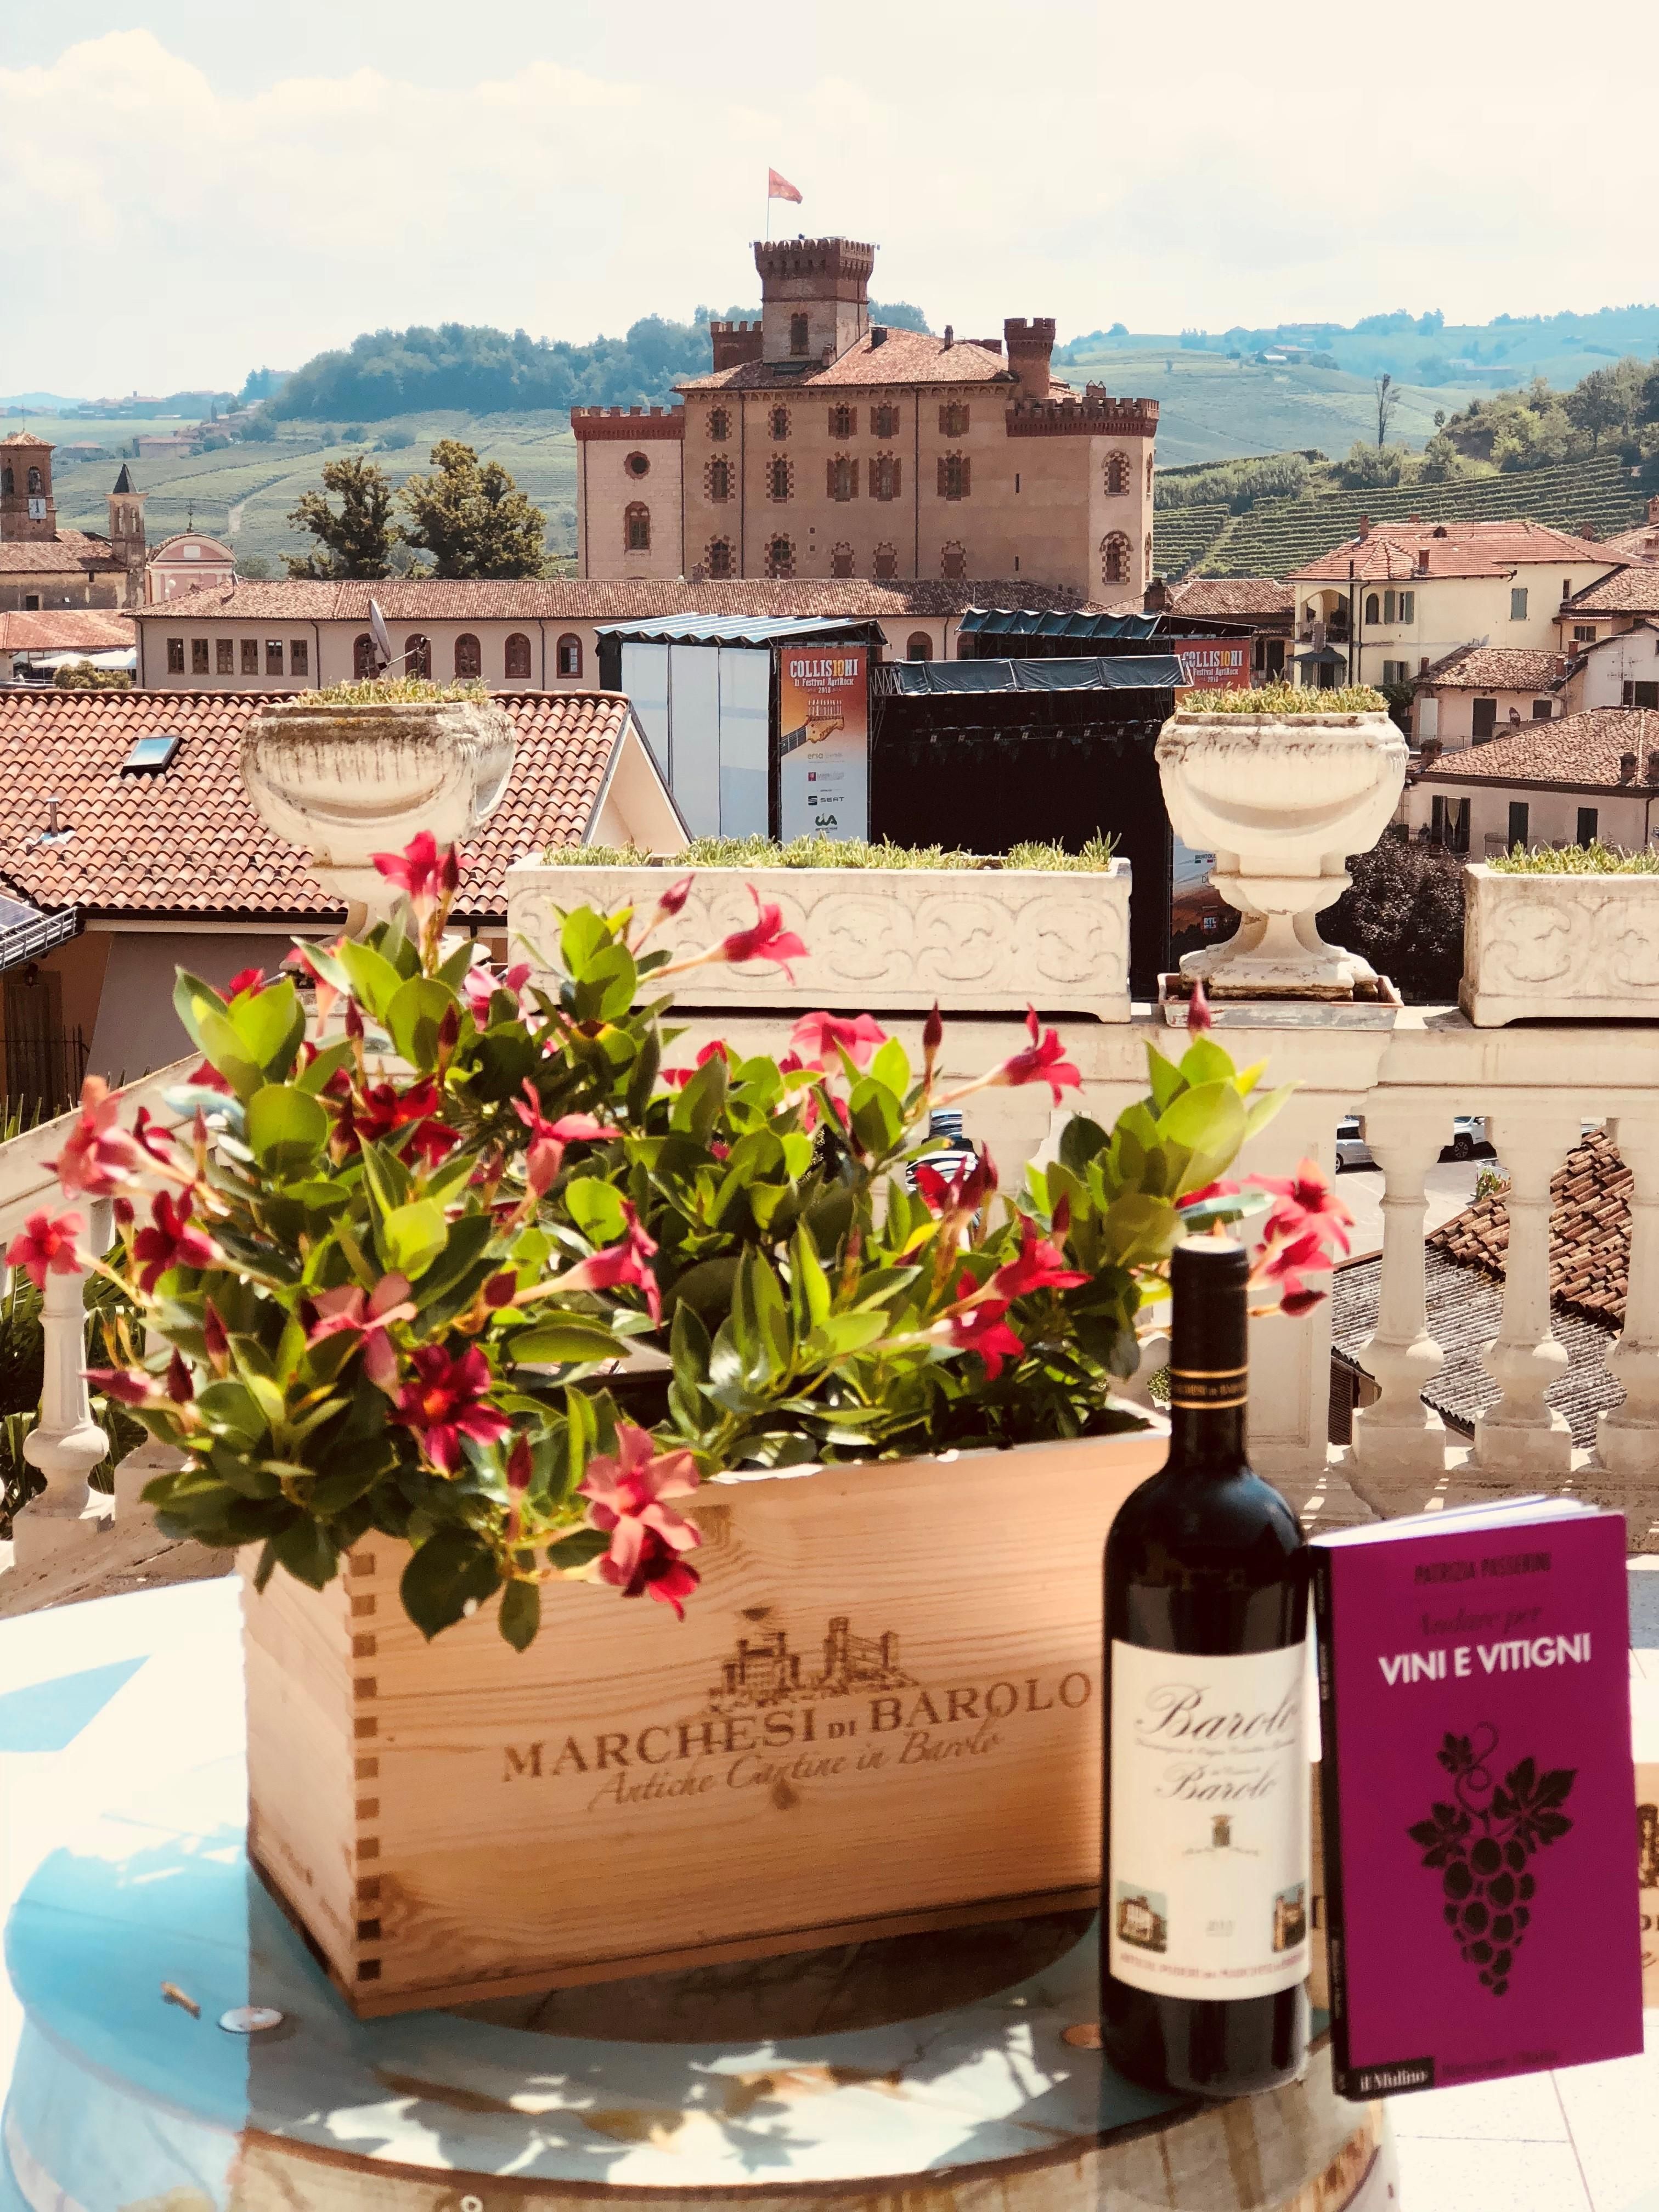 View of the Marchesi di Barolo winery